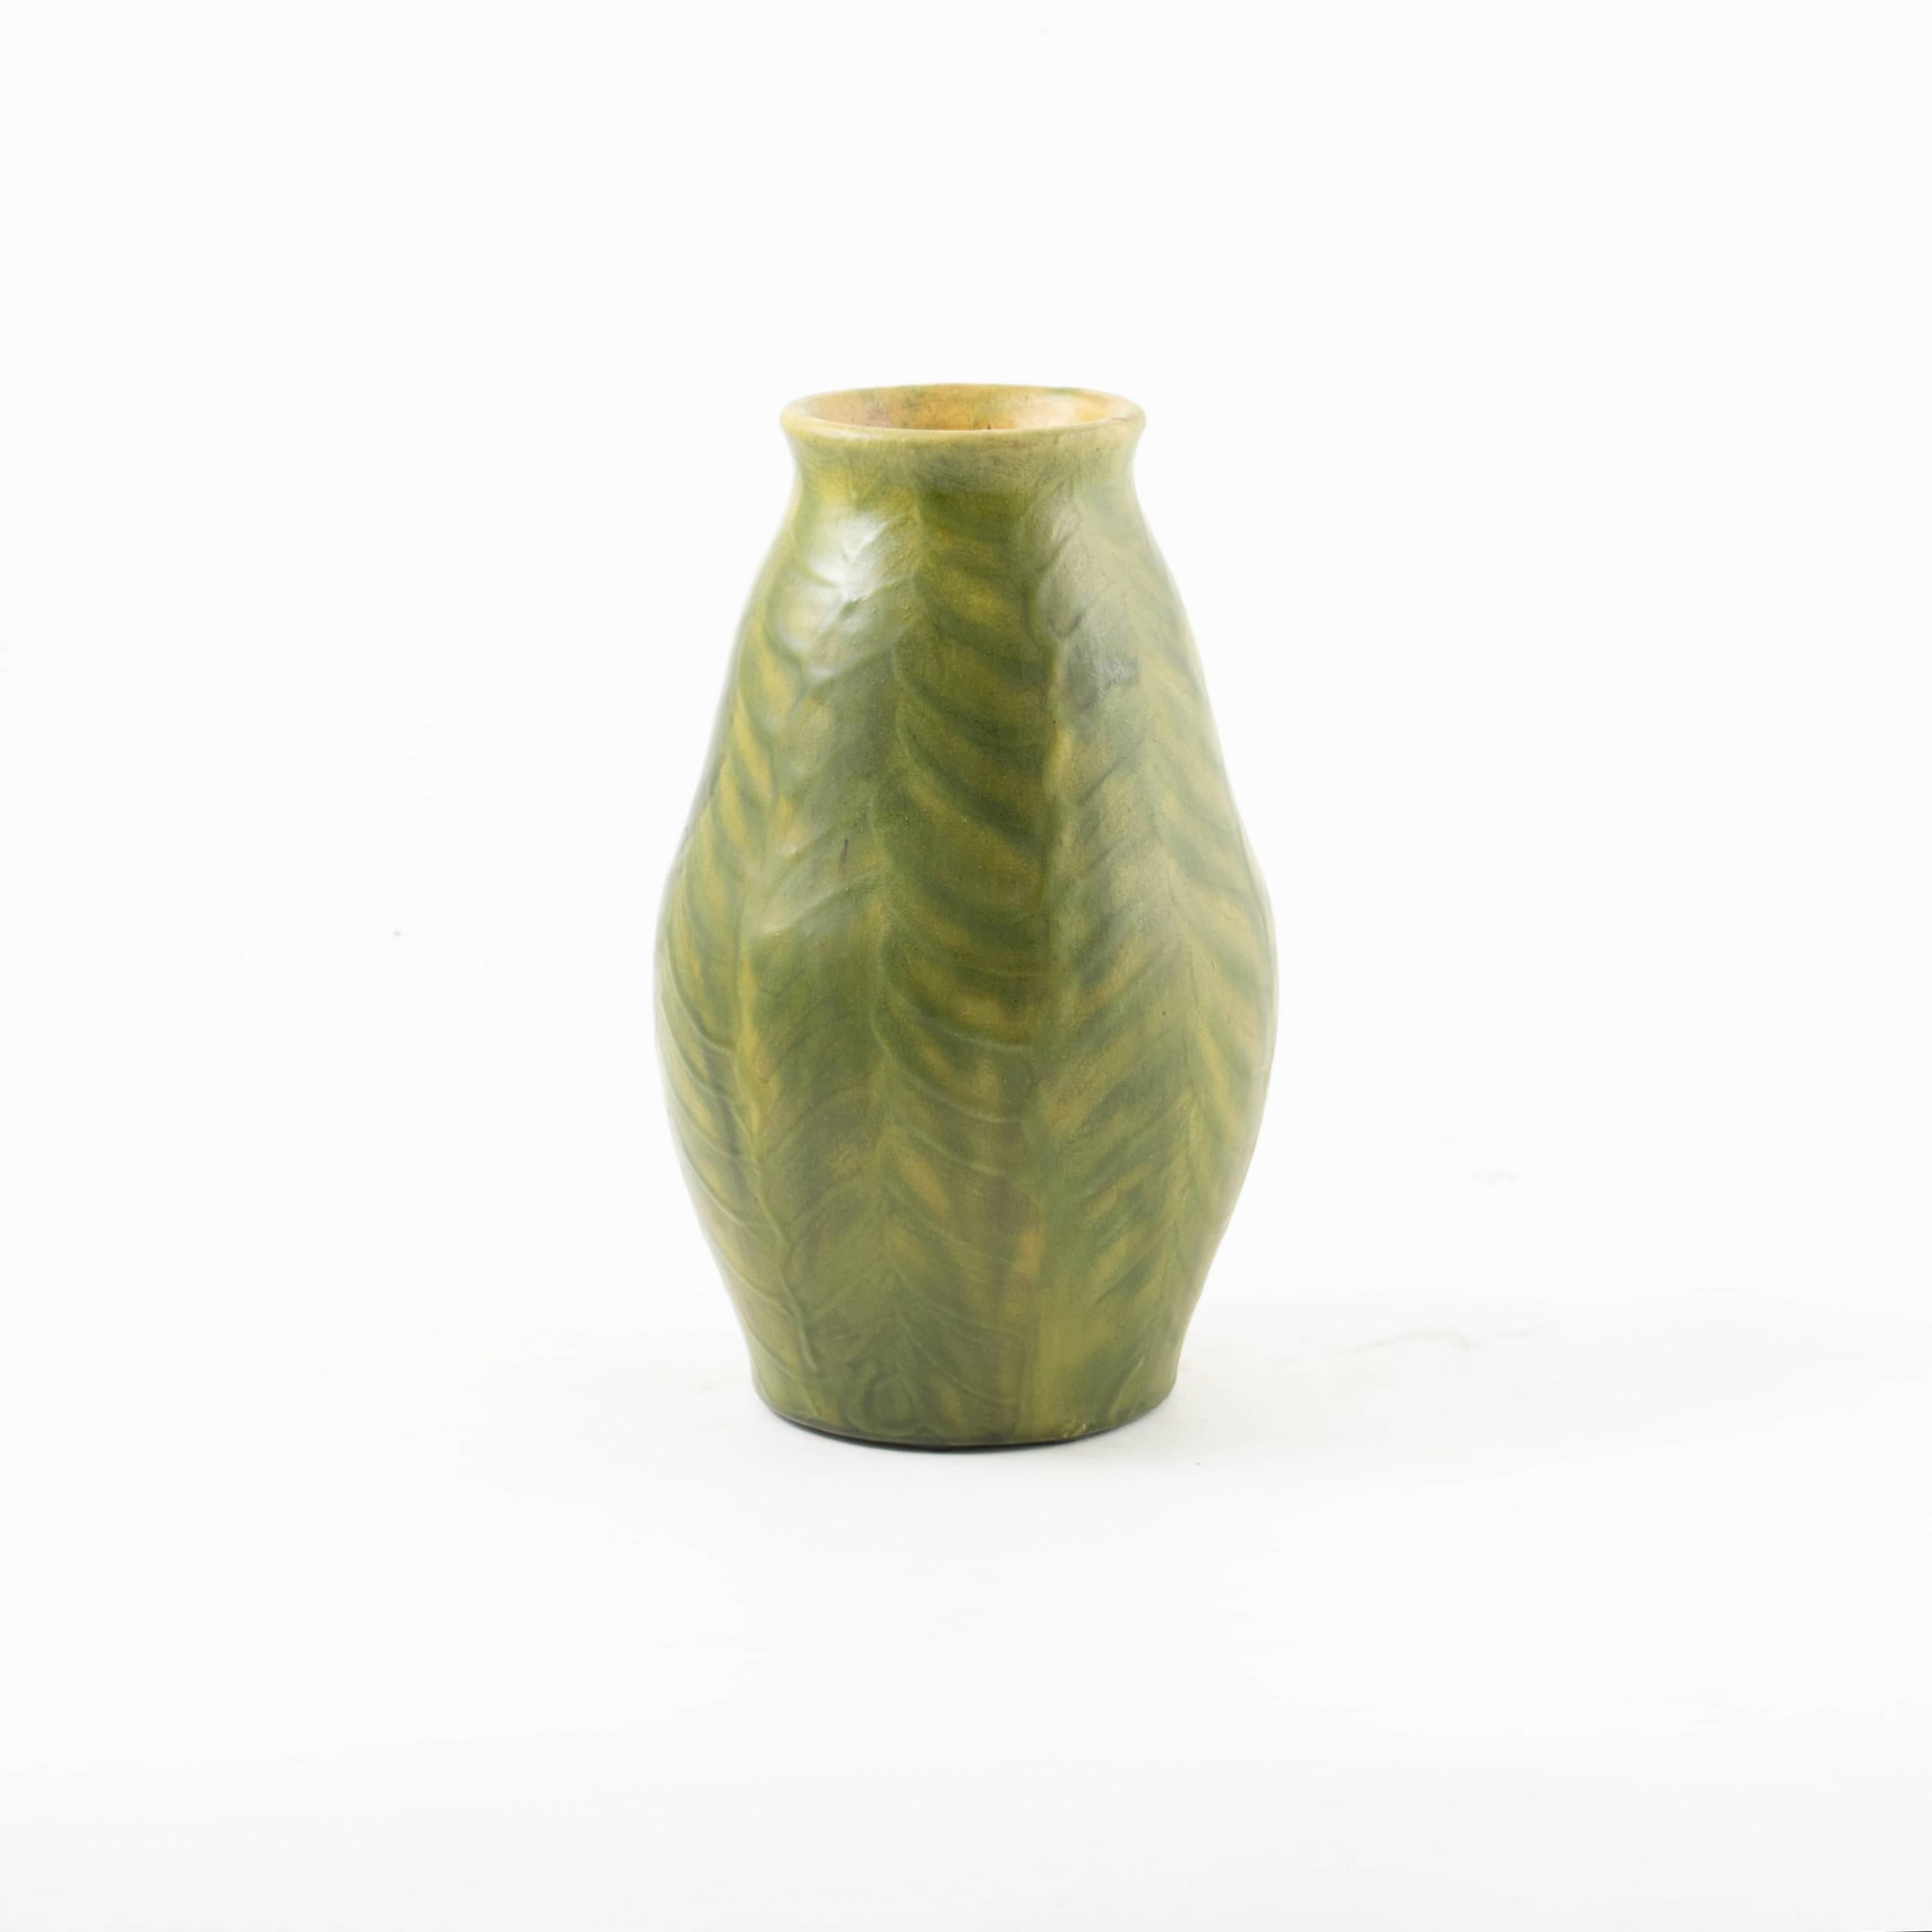 Glazed stoneware vase.
Green leaves on a yellow background.
Signed HAK

Denmark 1920-1930.